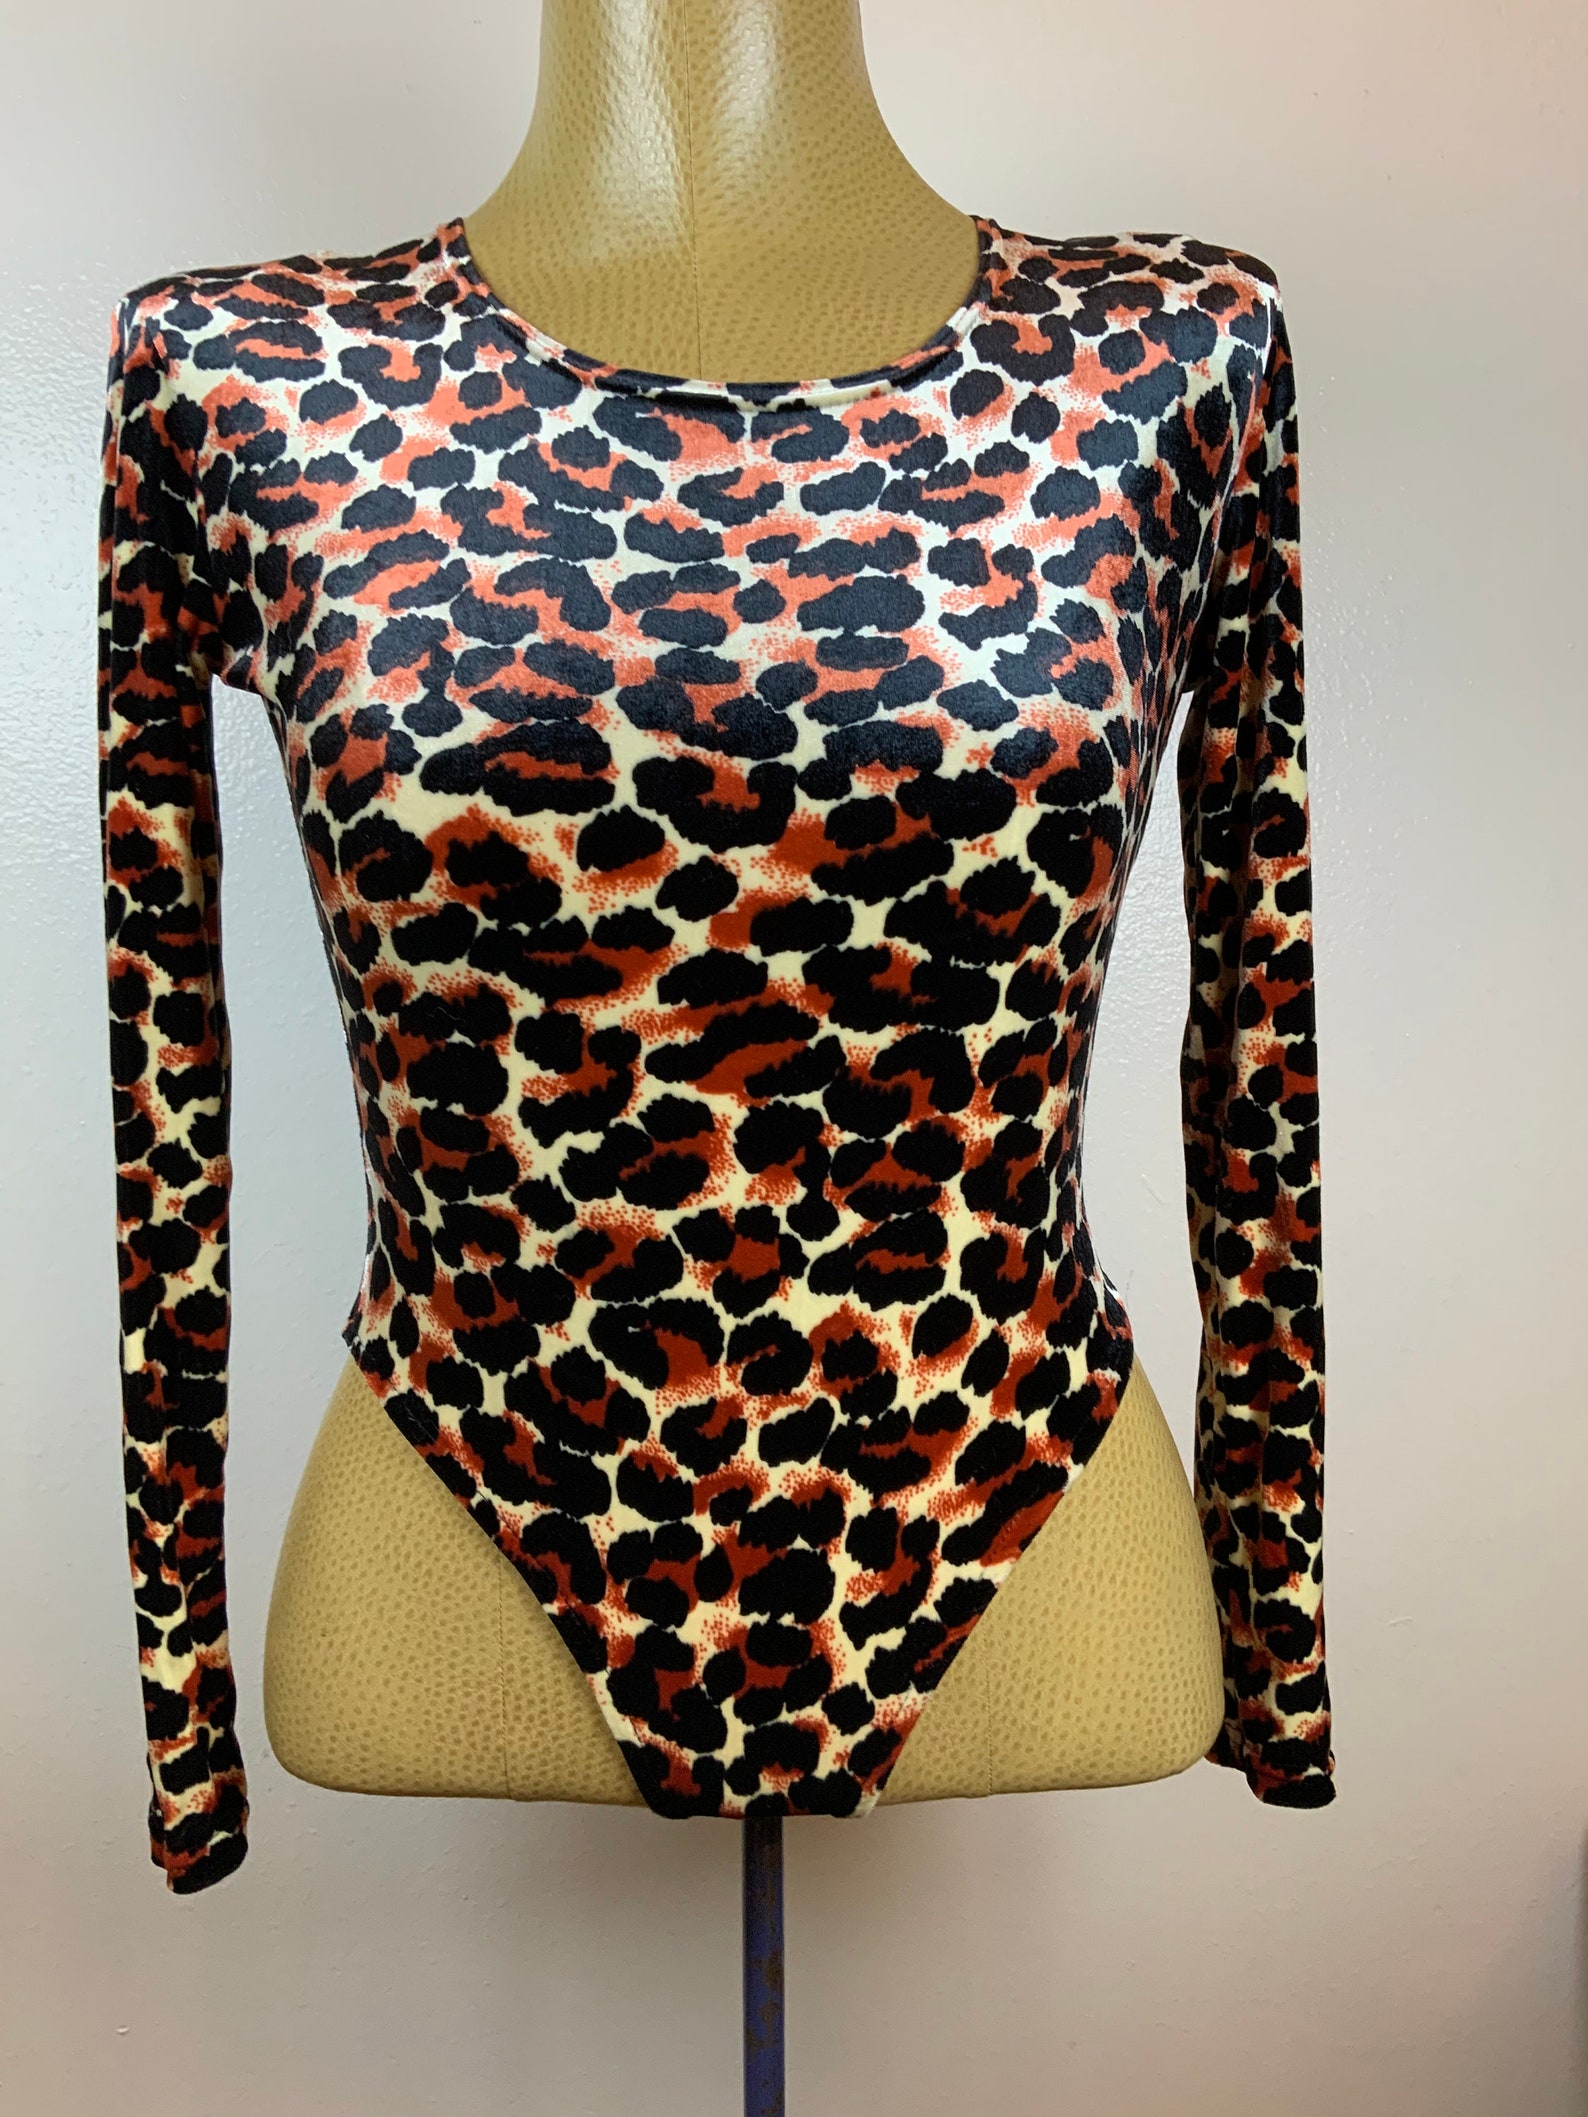 Vintage 1980s Cheetah Print Velvet Body Suit - Etsy